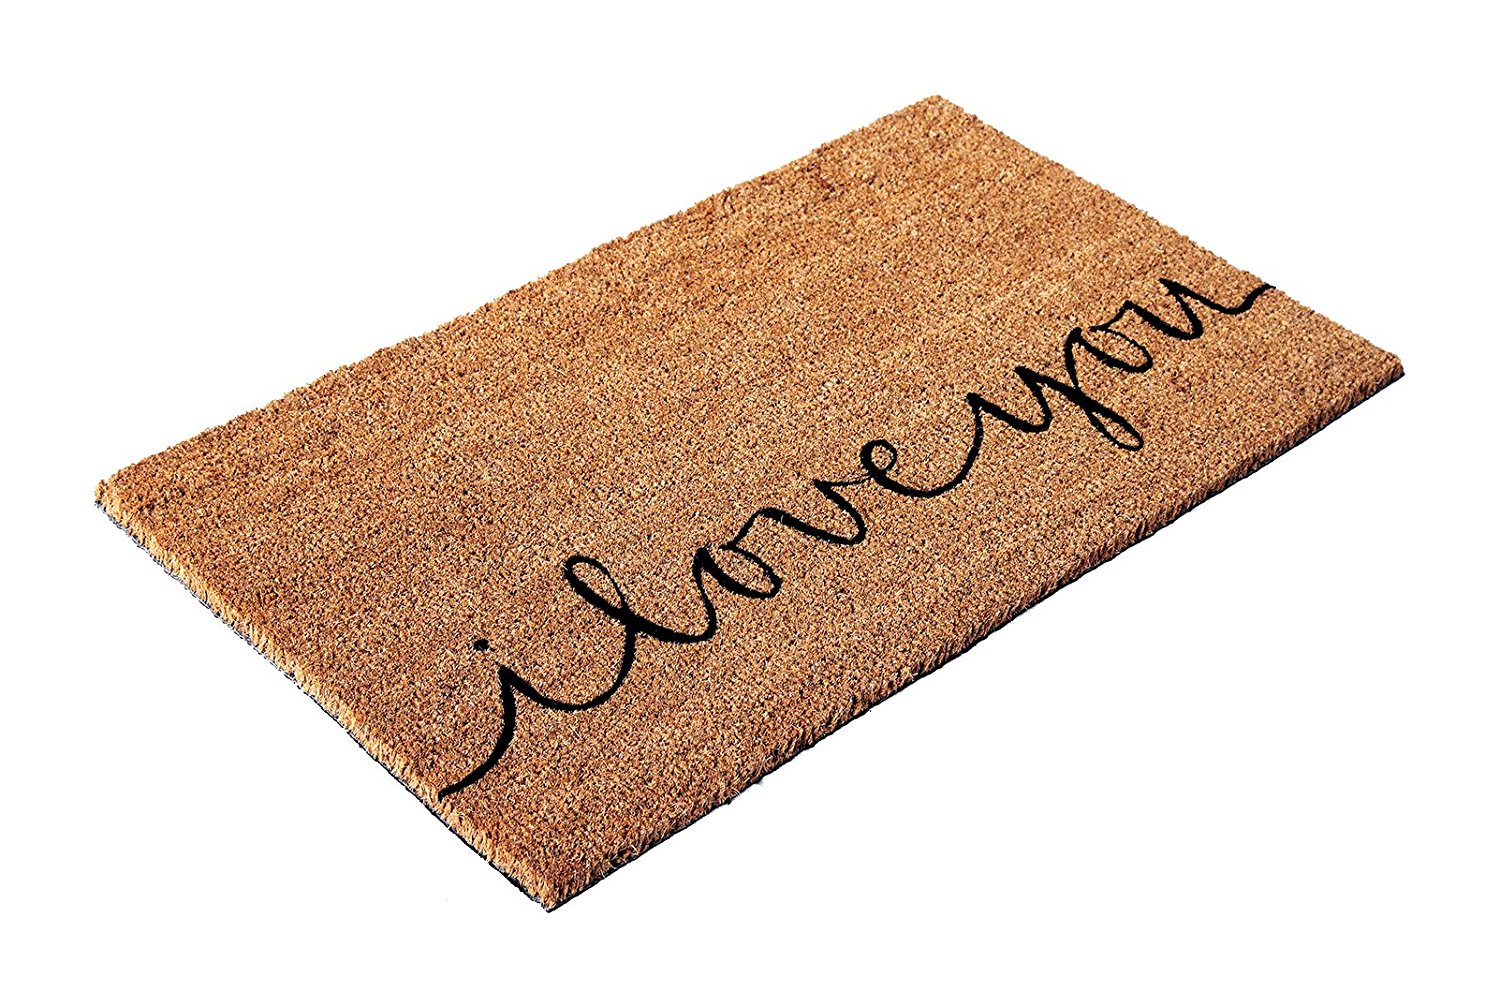 "I Love You" Printed Natural Coir Floor Mat - OnlyMat